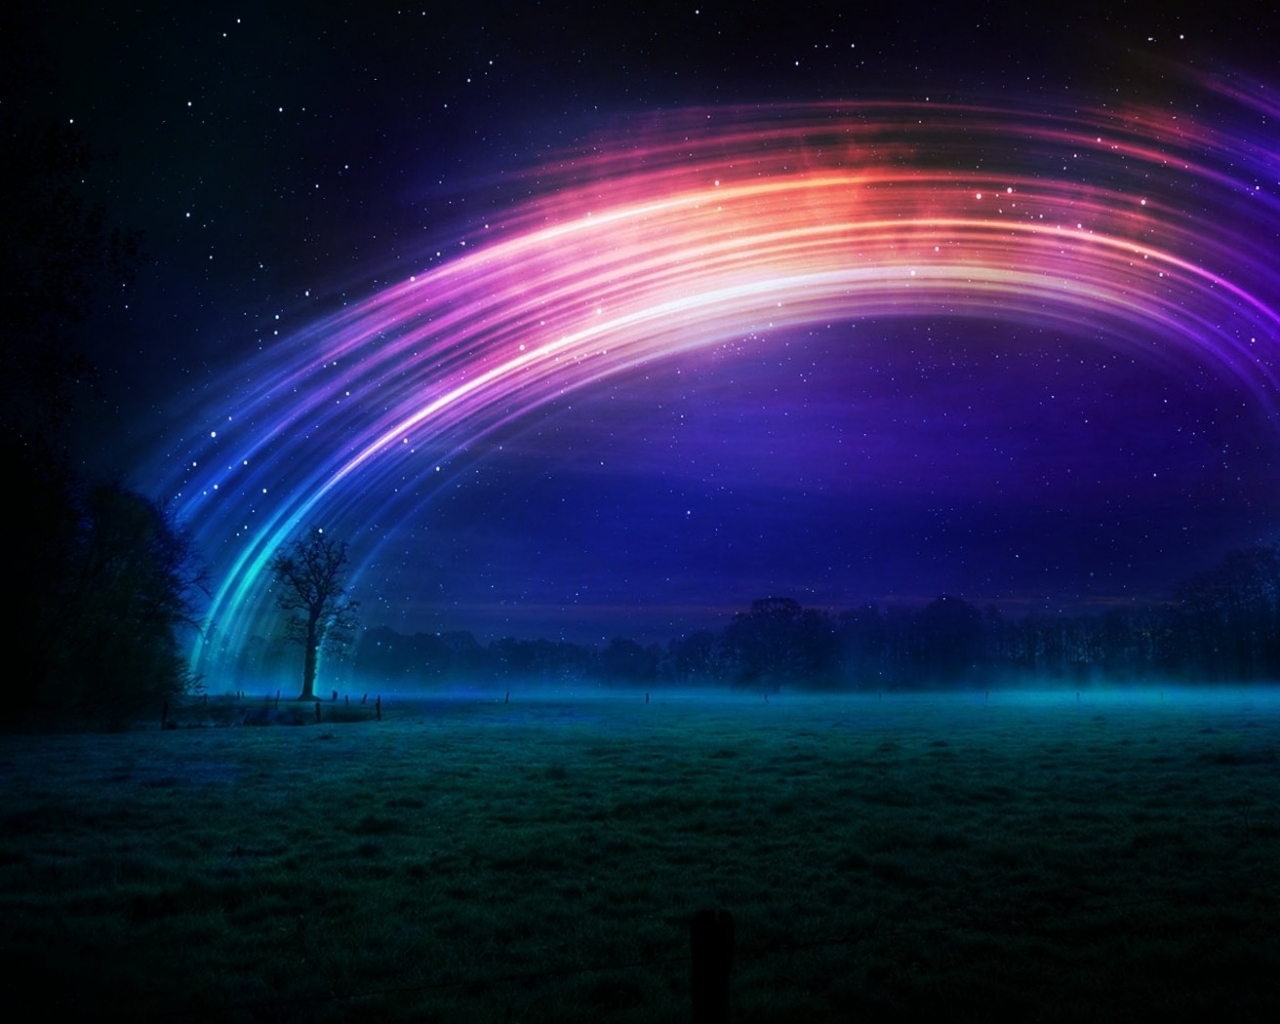 outer_space_night_stars_fields_mist_aurora_1680x1050_wallpaper_Wallpaper_1280x1024_www.wallpaperswa.com.jpg